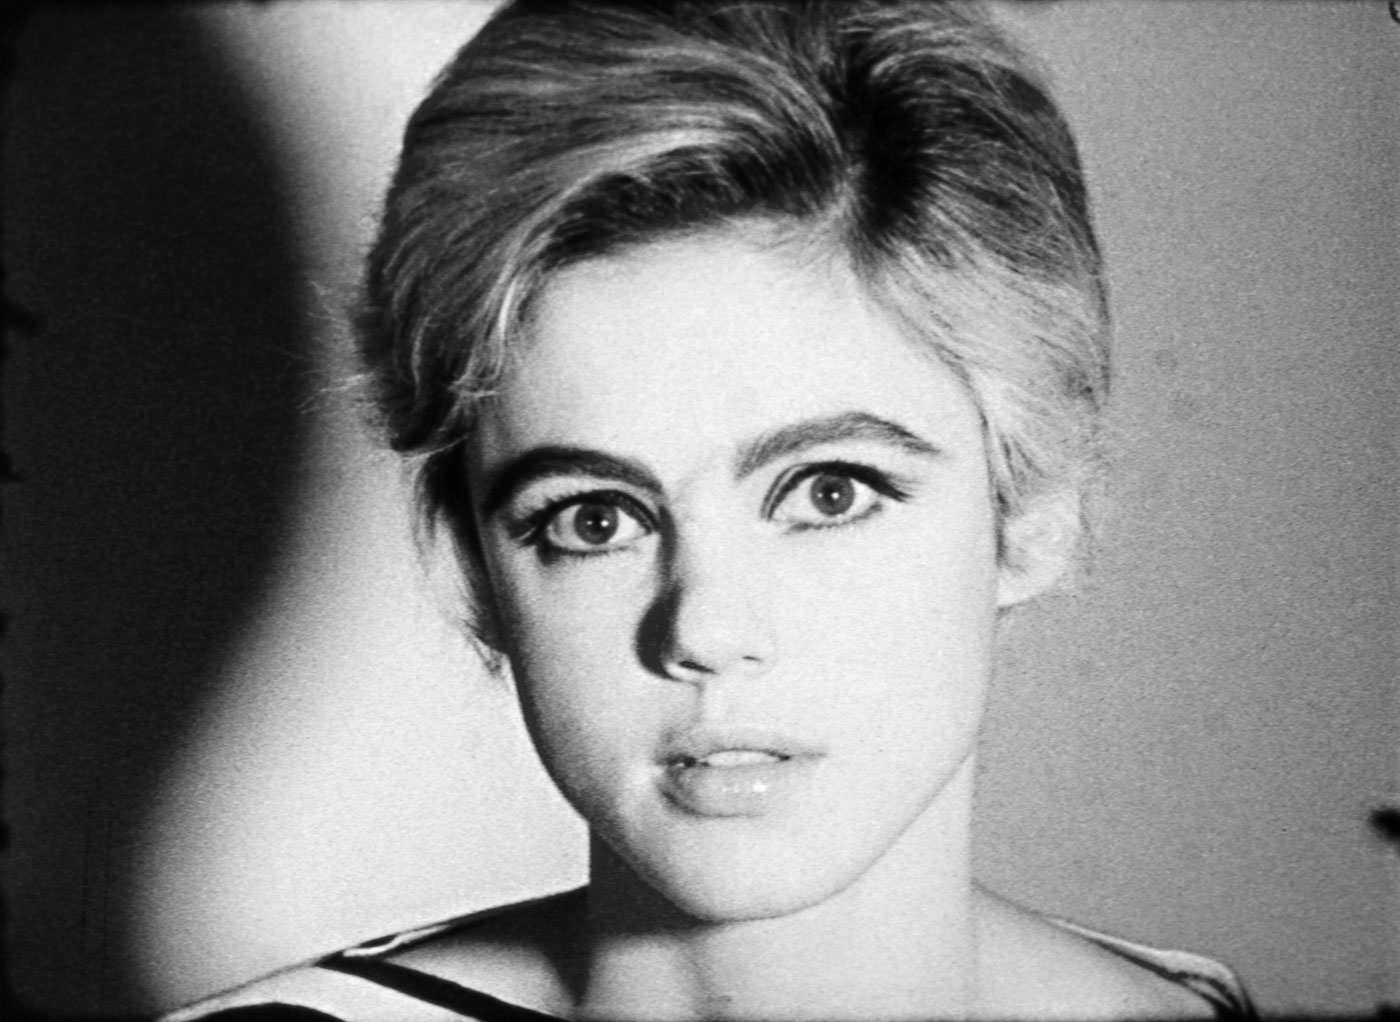 Andy Warhol (American, 1928-1987) 'Screen Test: Edie Sedgwick [ST308]' 1965